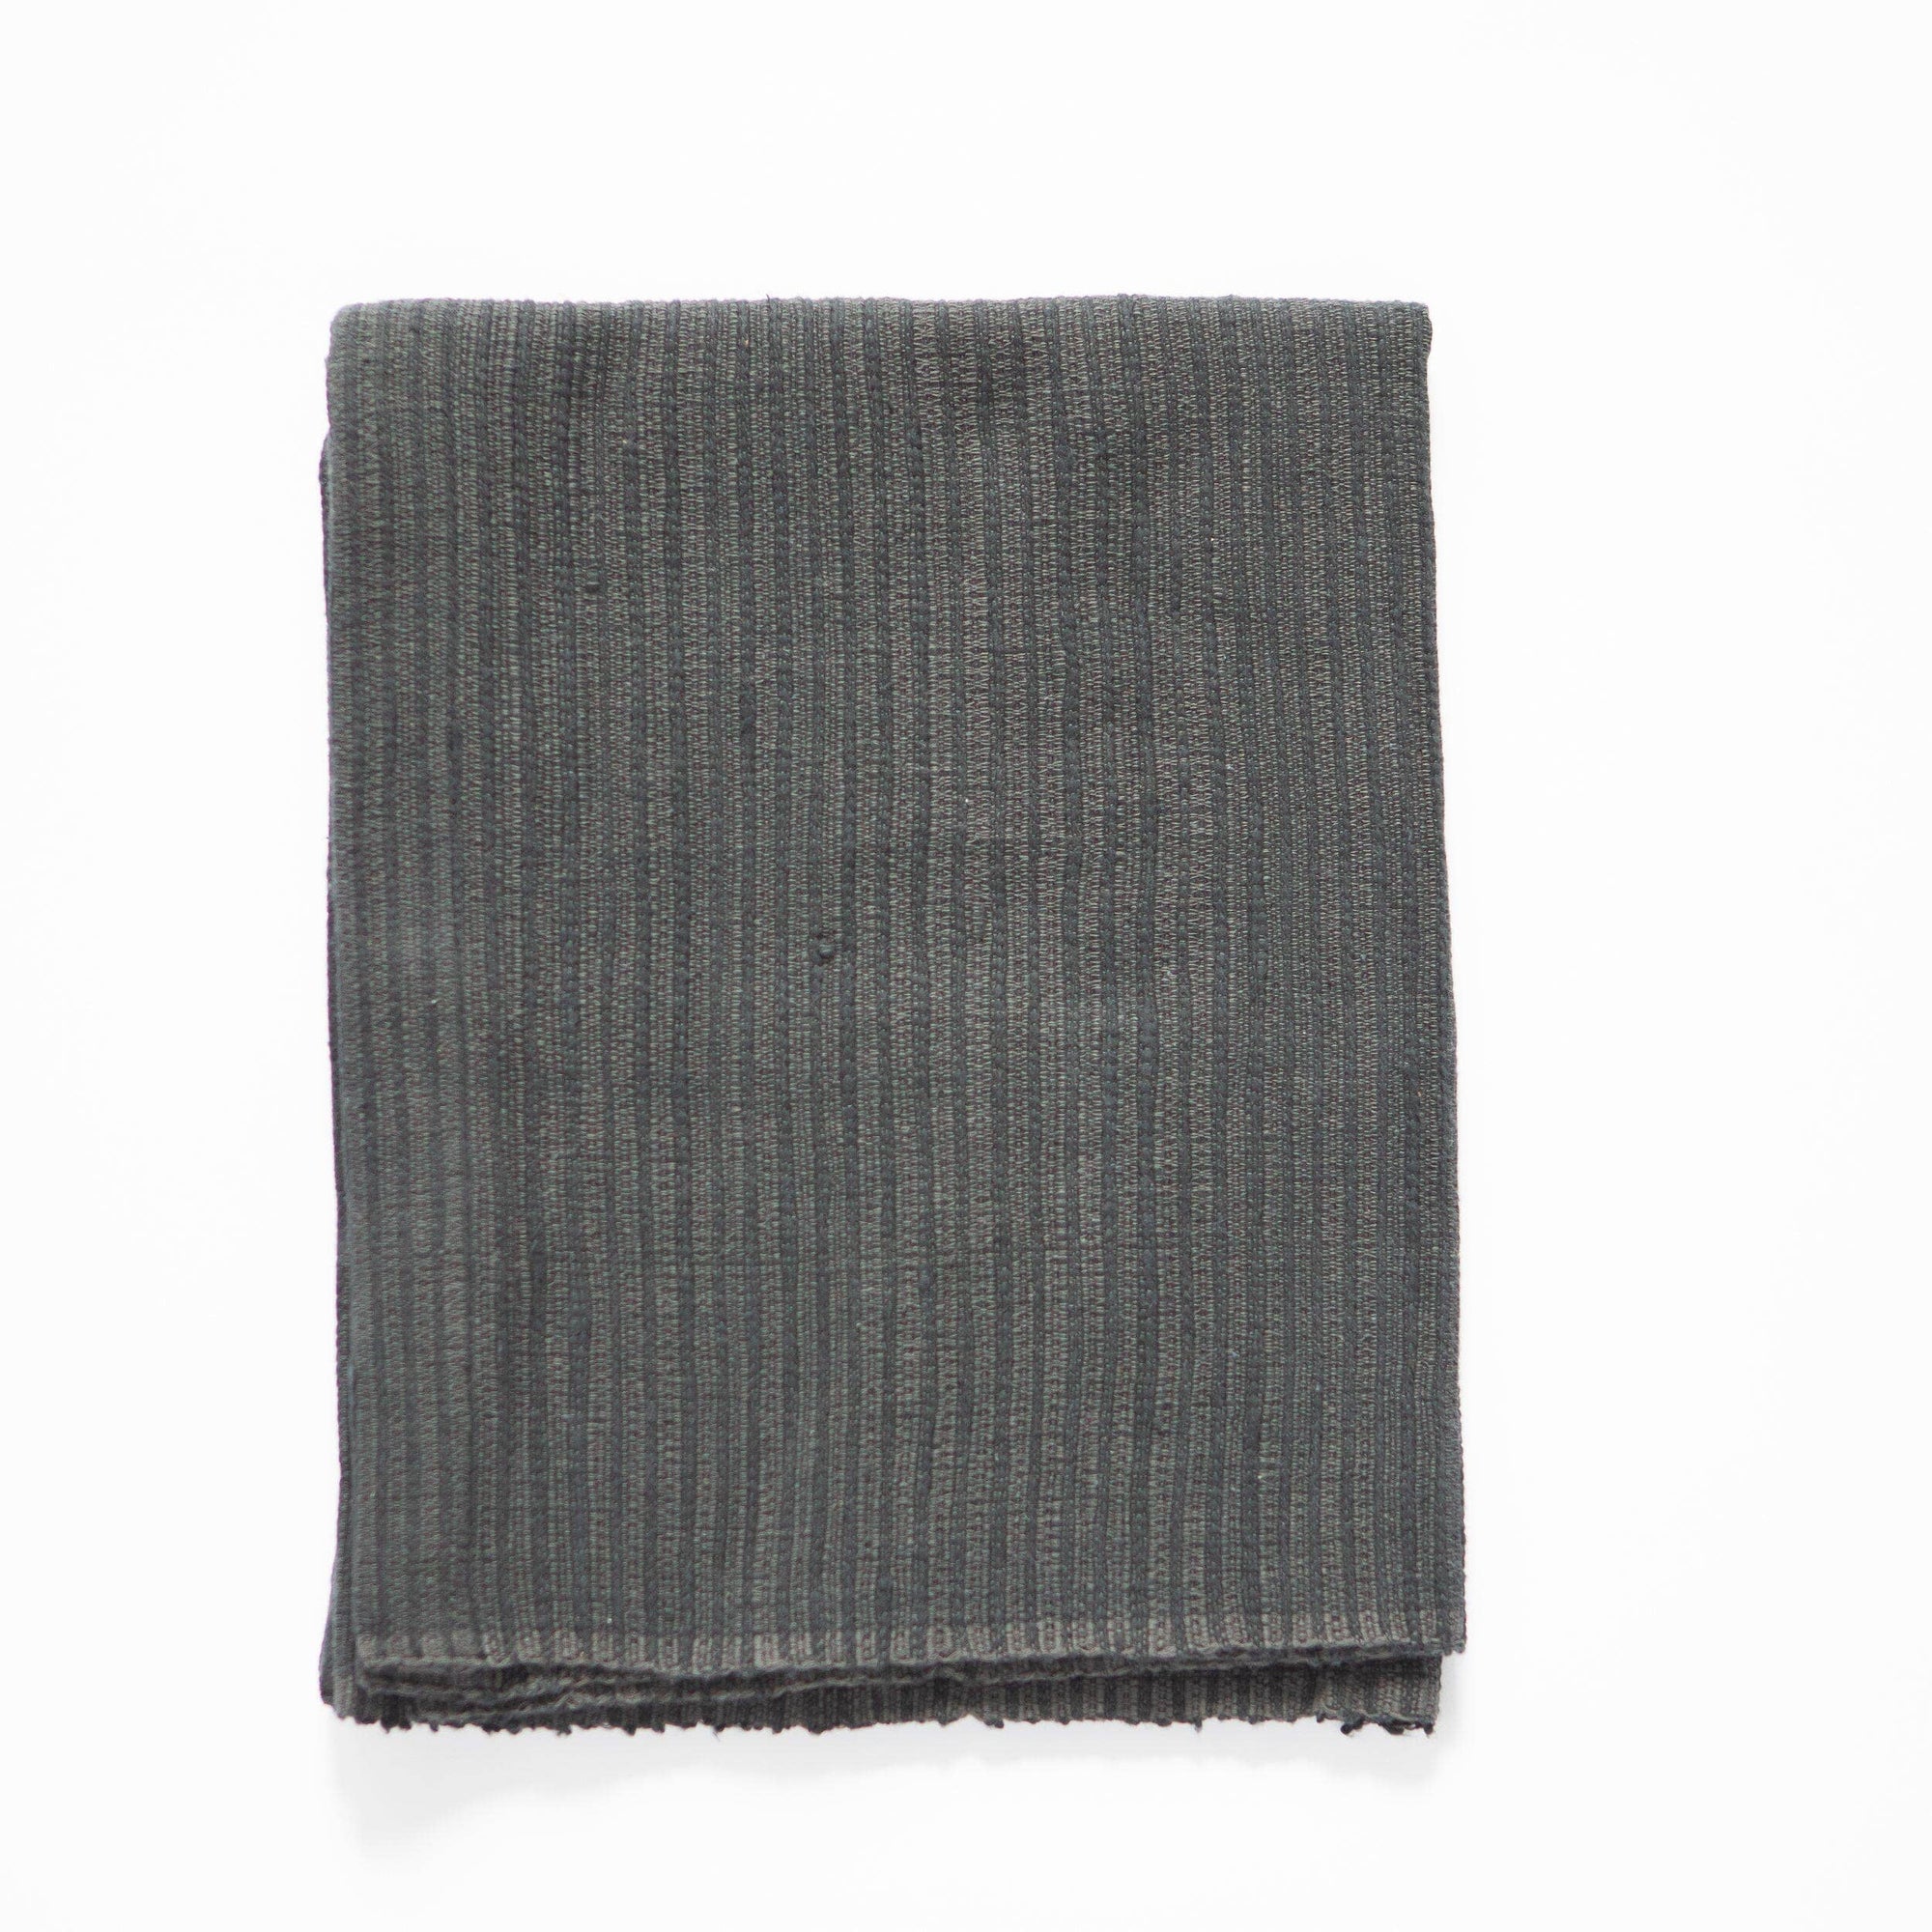 Zarima hand woven Ethiopian cotton waffle bath towel: Black - The Unoriginal Bathroom Co.